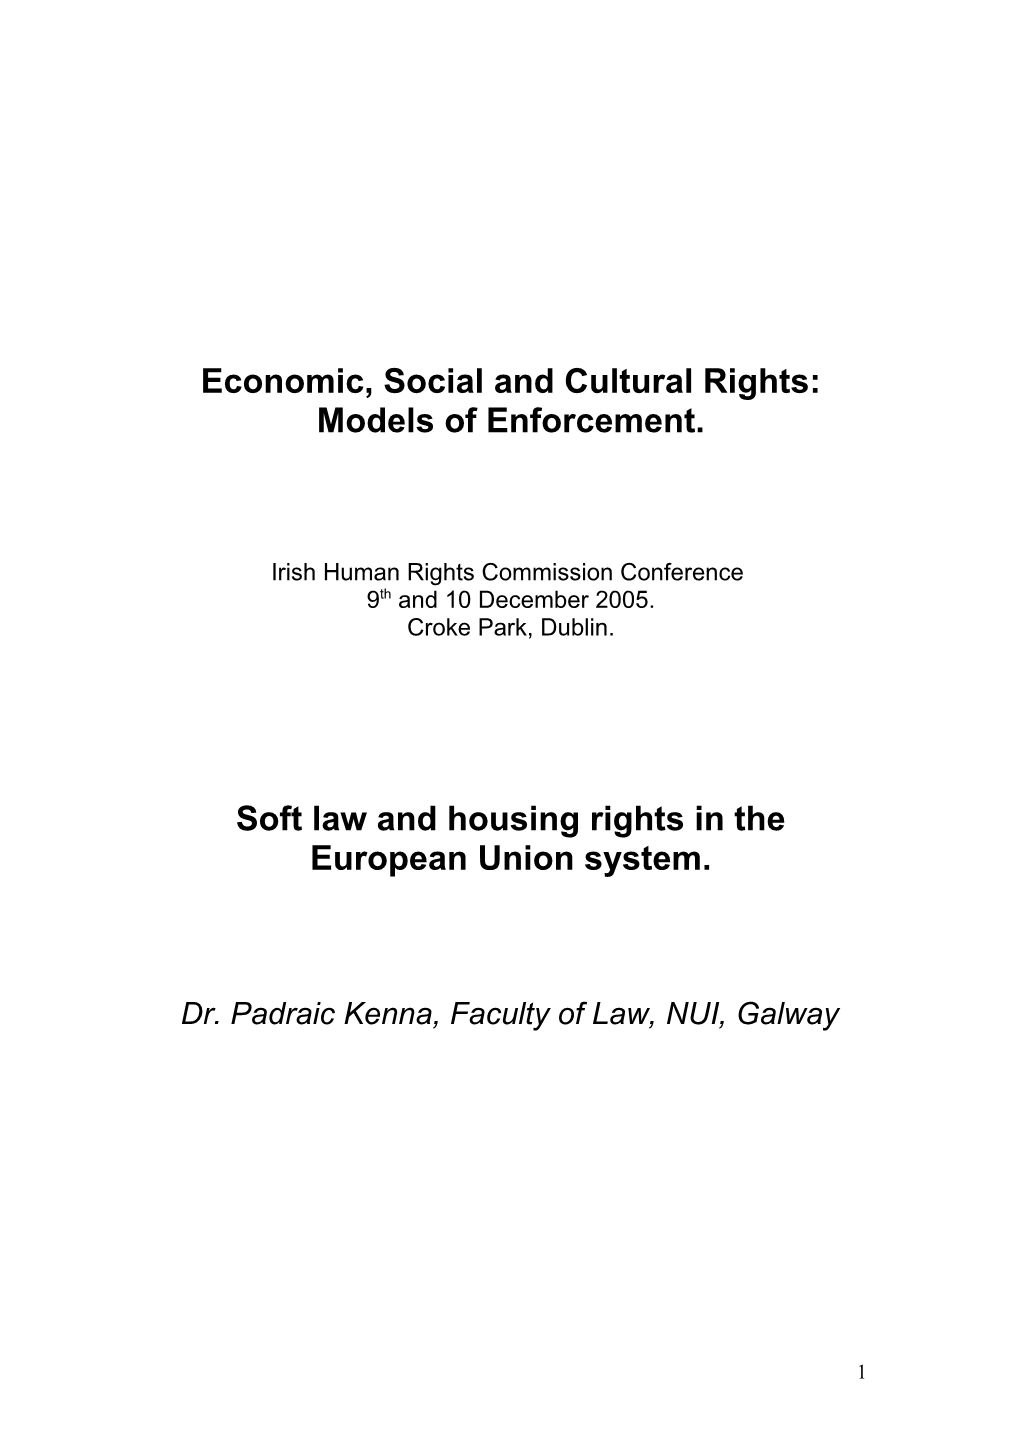 Economic, Social and Cultural Rights: Models of Enforcement